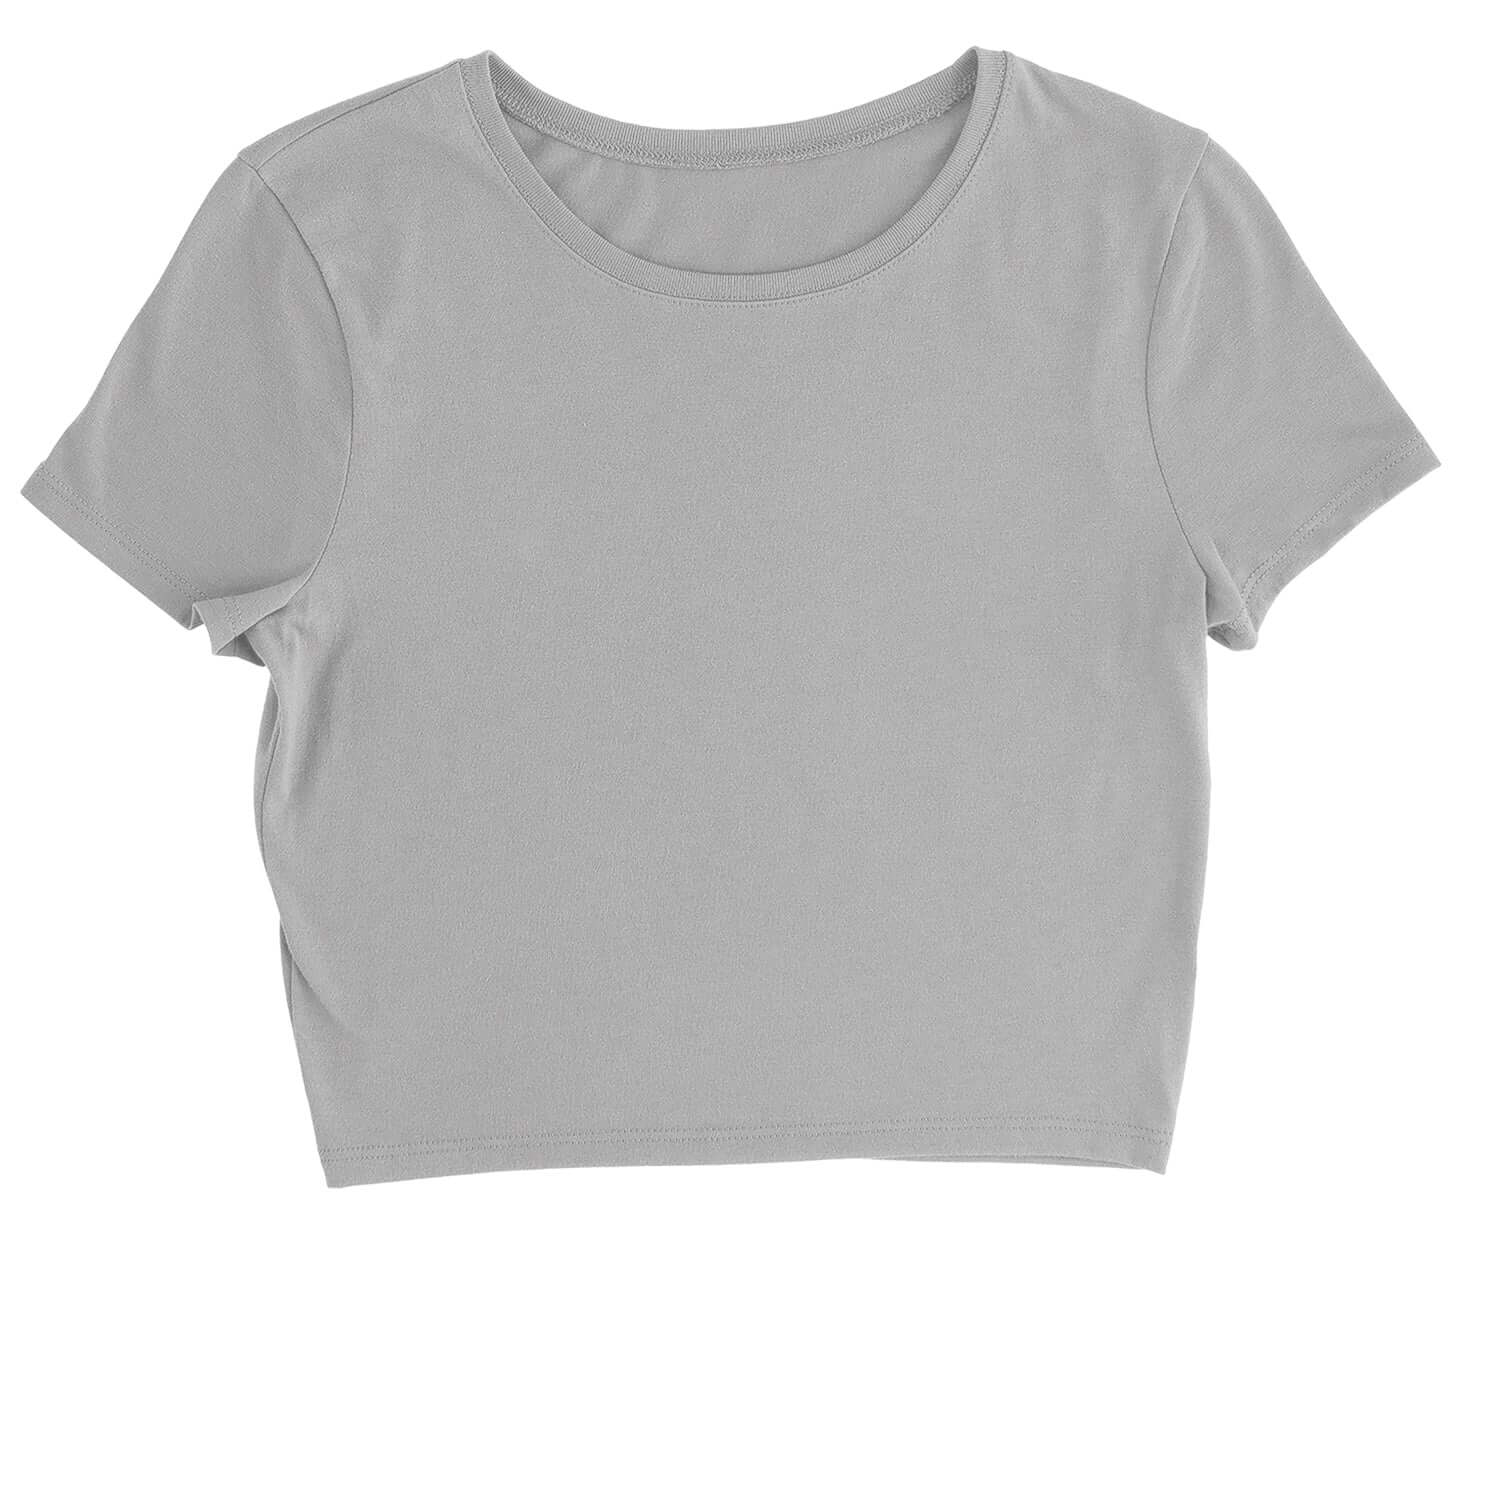 Basics - Plain Blank Cropped T-Shirt blank, clothing, plain, tshirts by Expression Tees